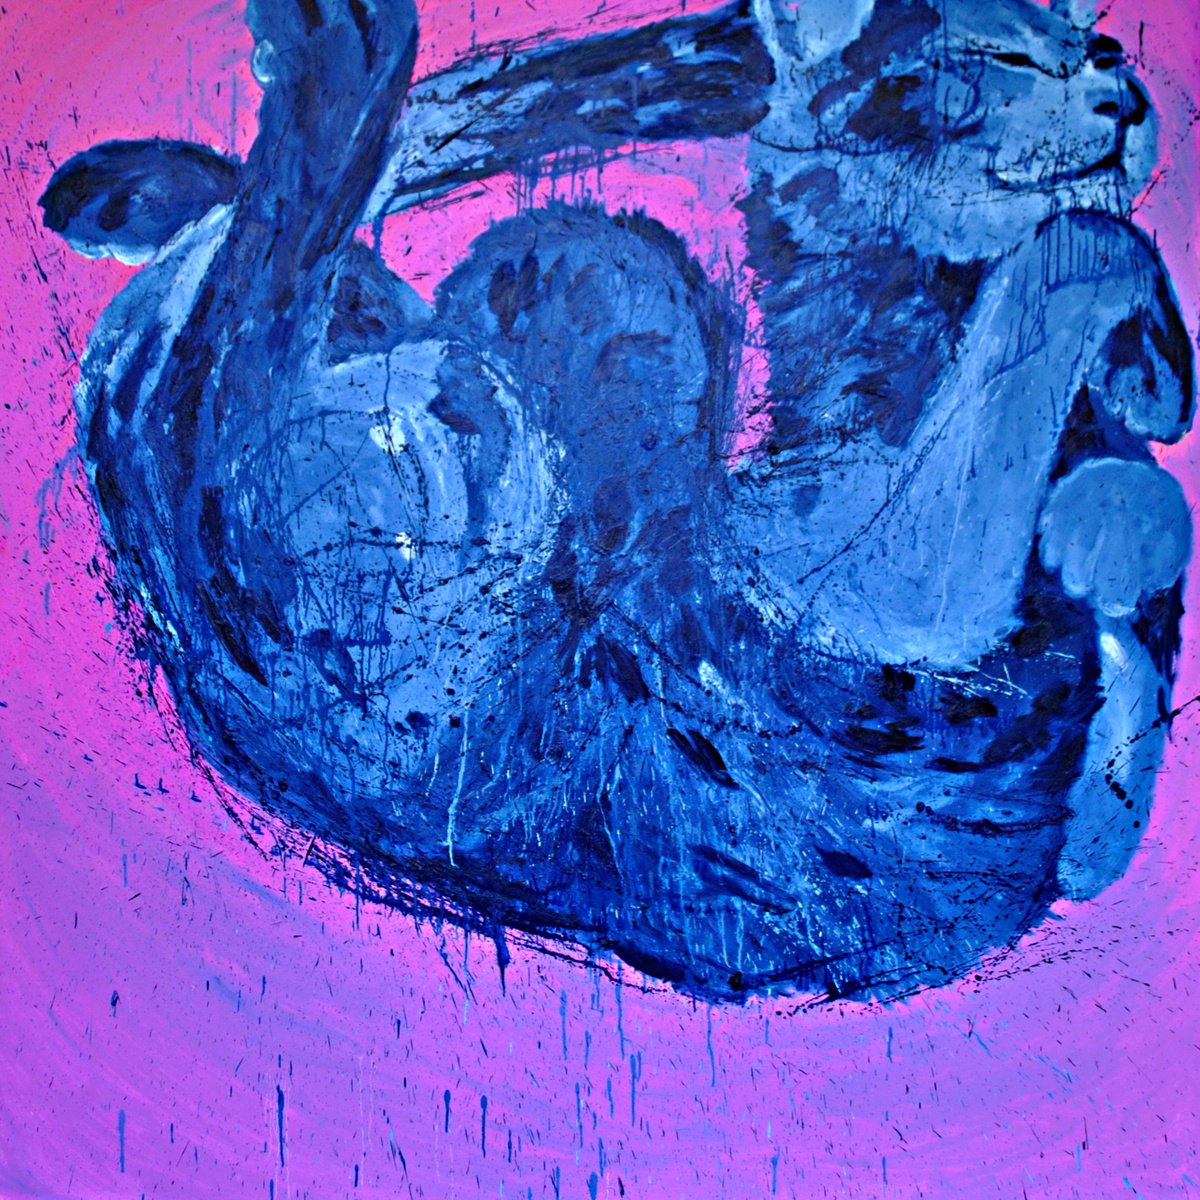 Blue Cat on Pink Background by Dominic-Petru Virtosu